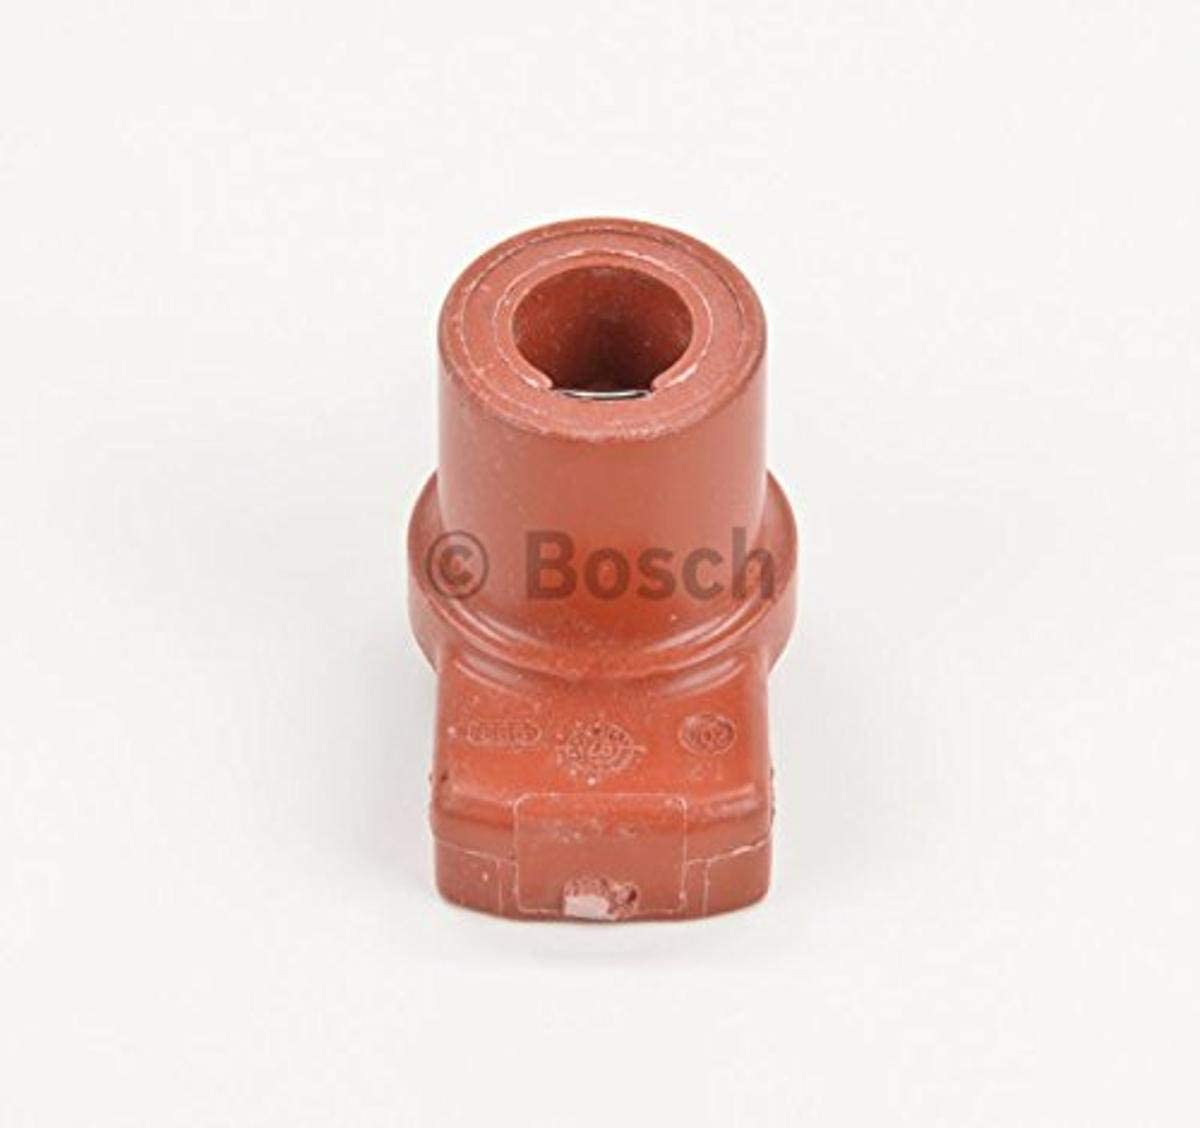 Bosch 04018 Ignition Rotor